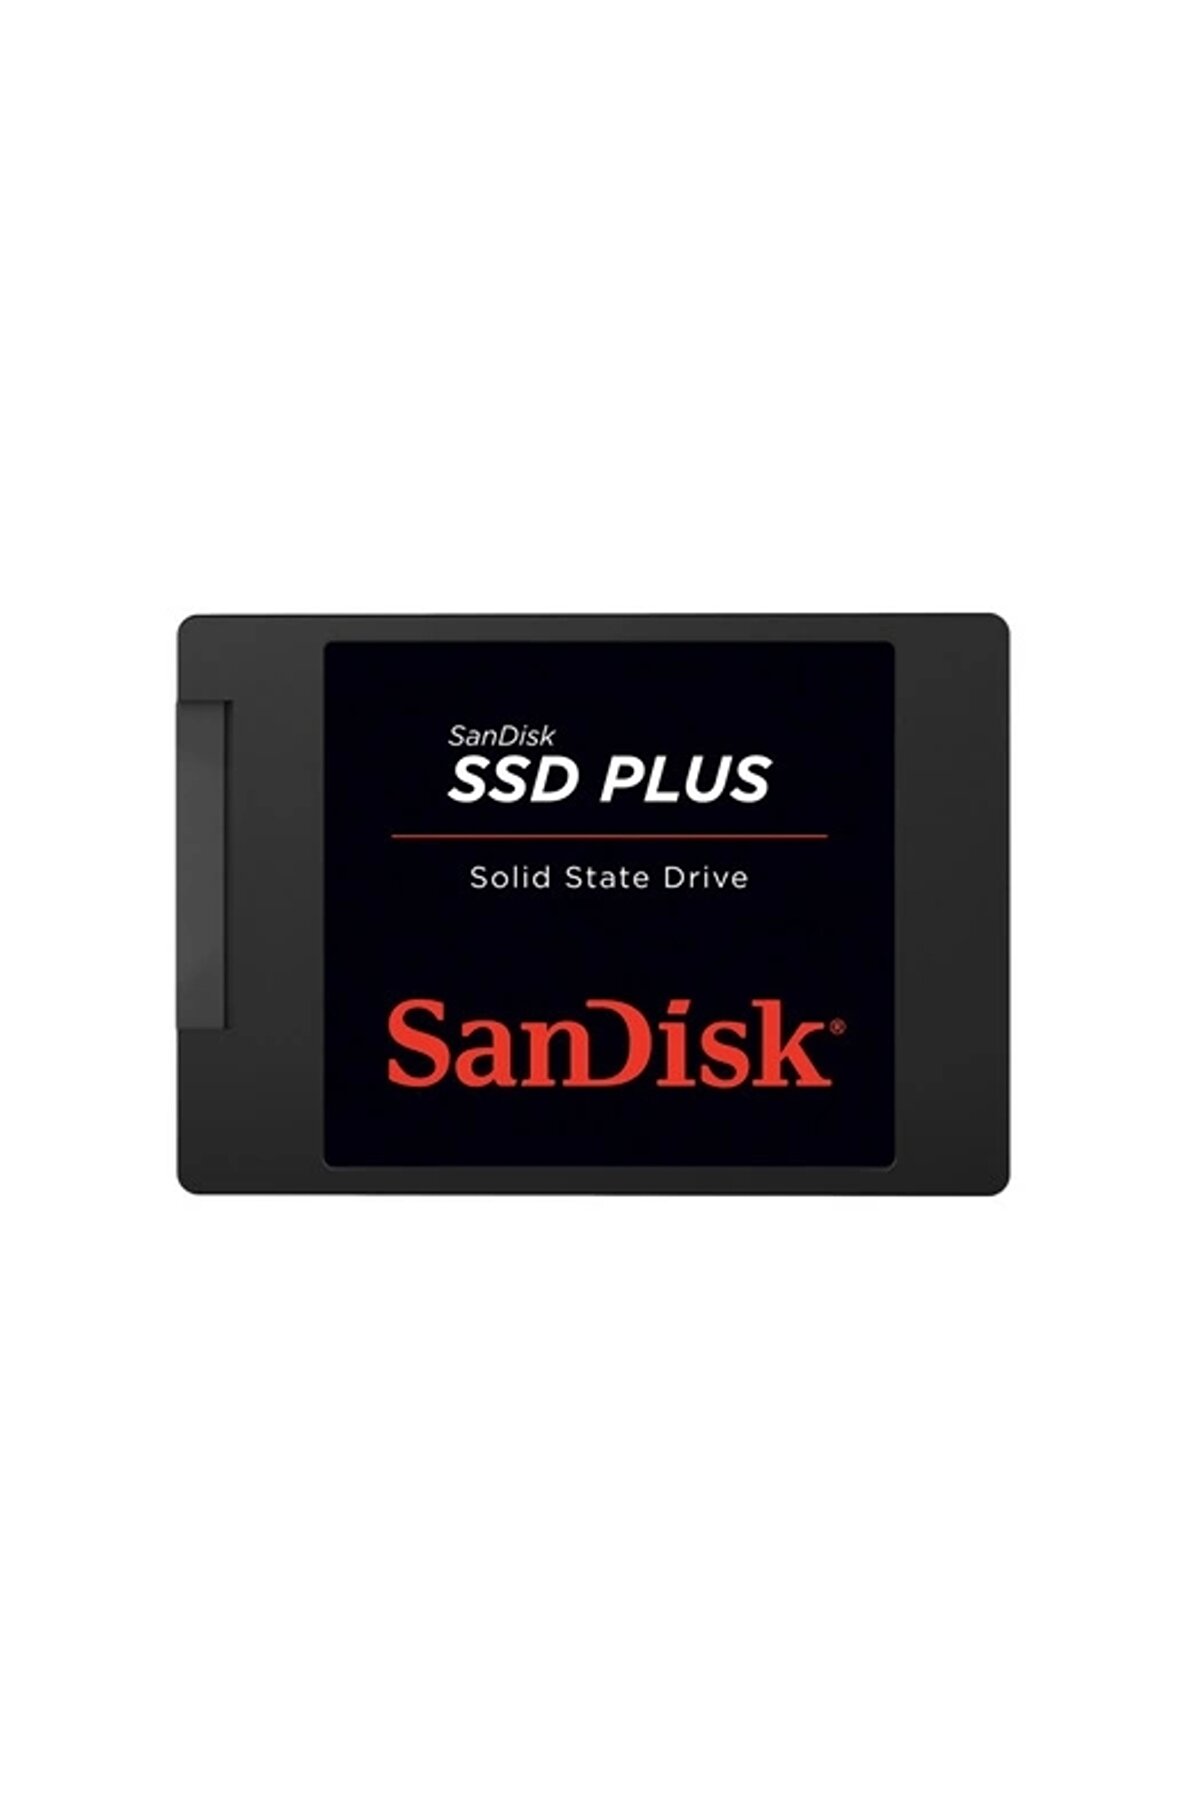 Sandisk Ssd Plus 480gb 535mb-445mb/s Sata 3 2.5 Inc Ssd Sdssda-480g-g26